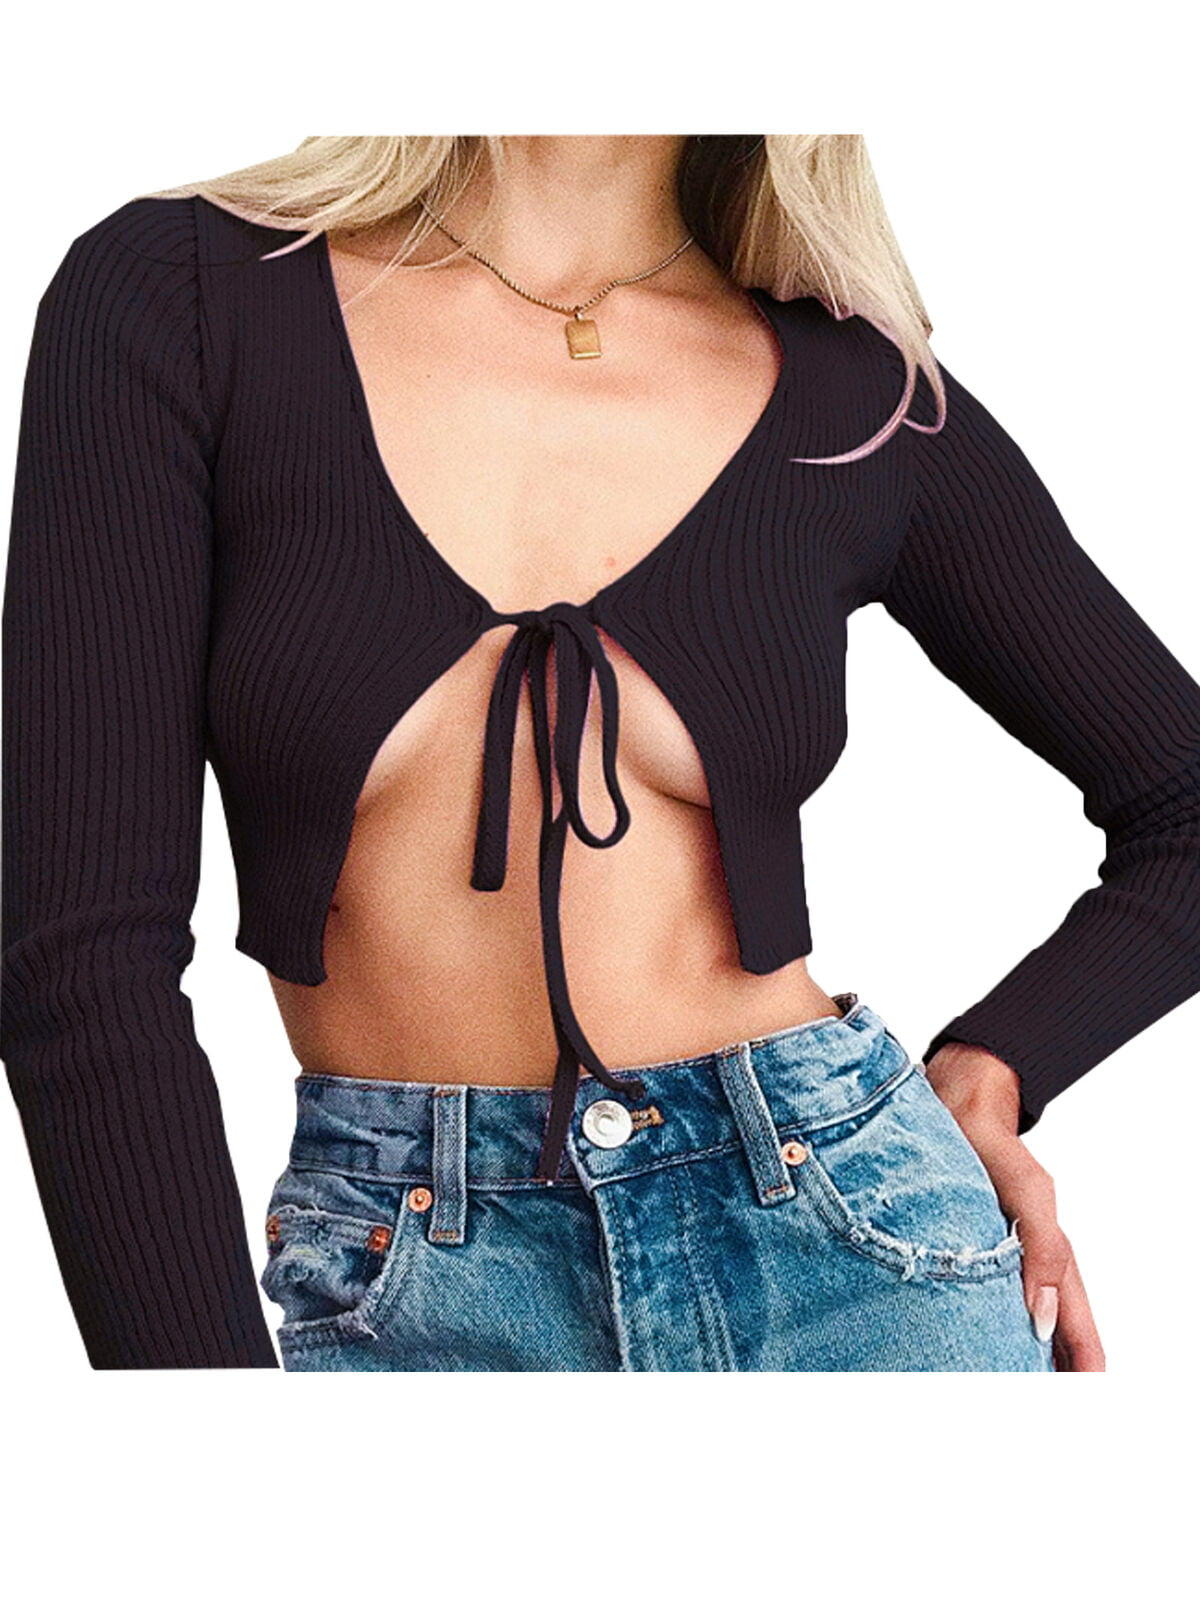 Chest blouses fashion new Long Sleeve short Tops shirt - Walmart.com